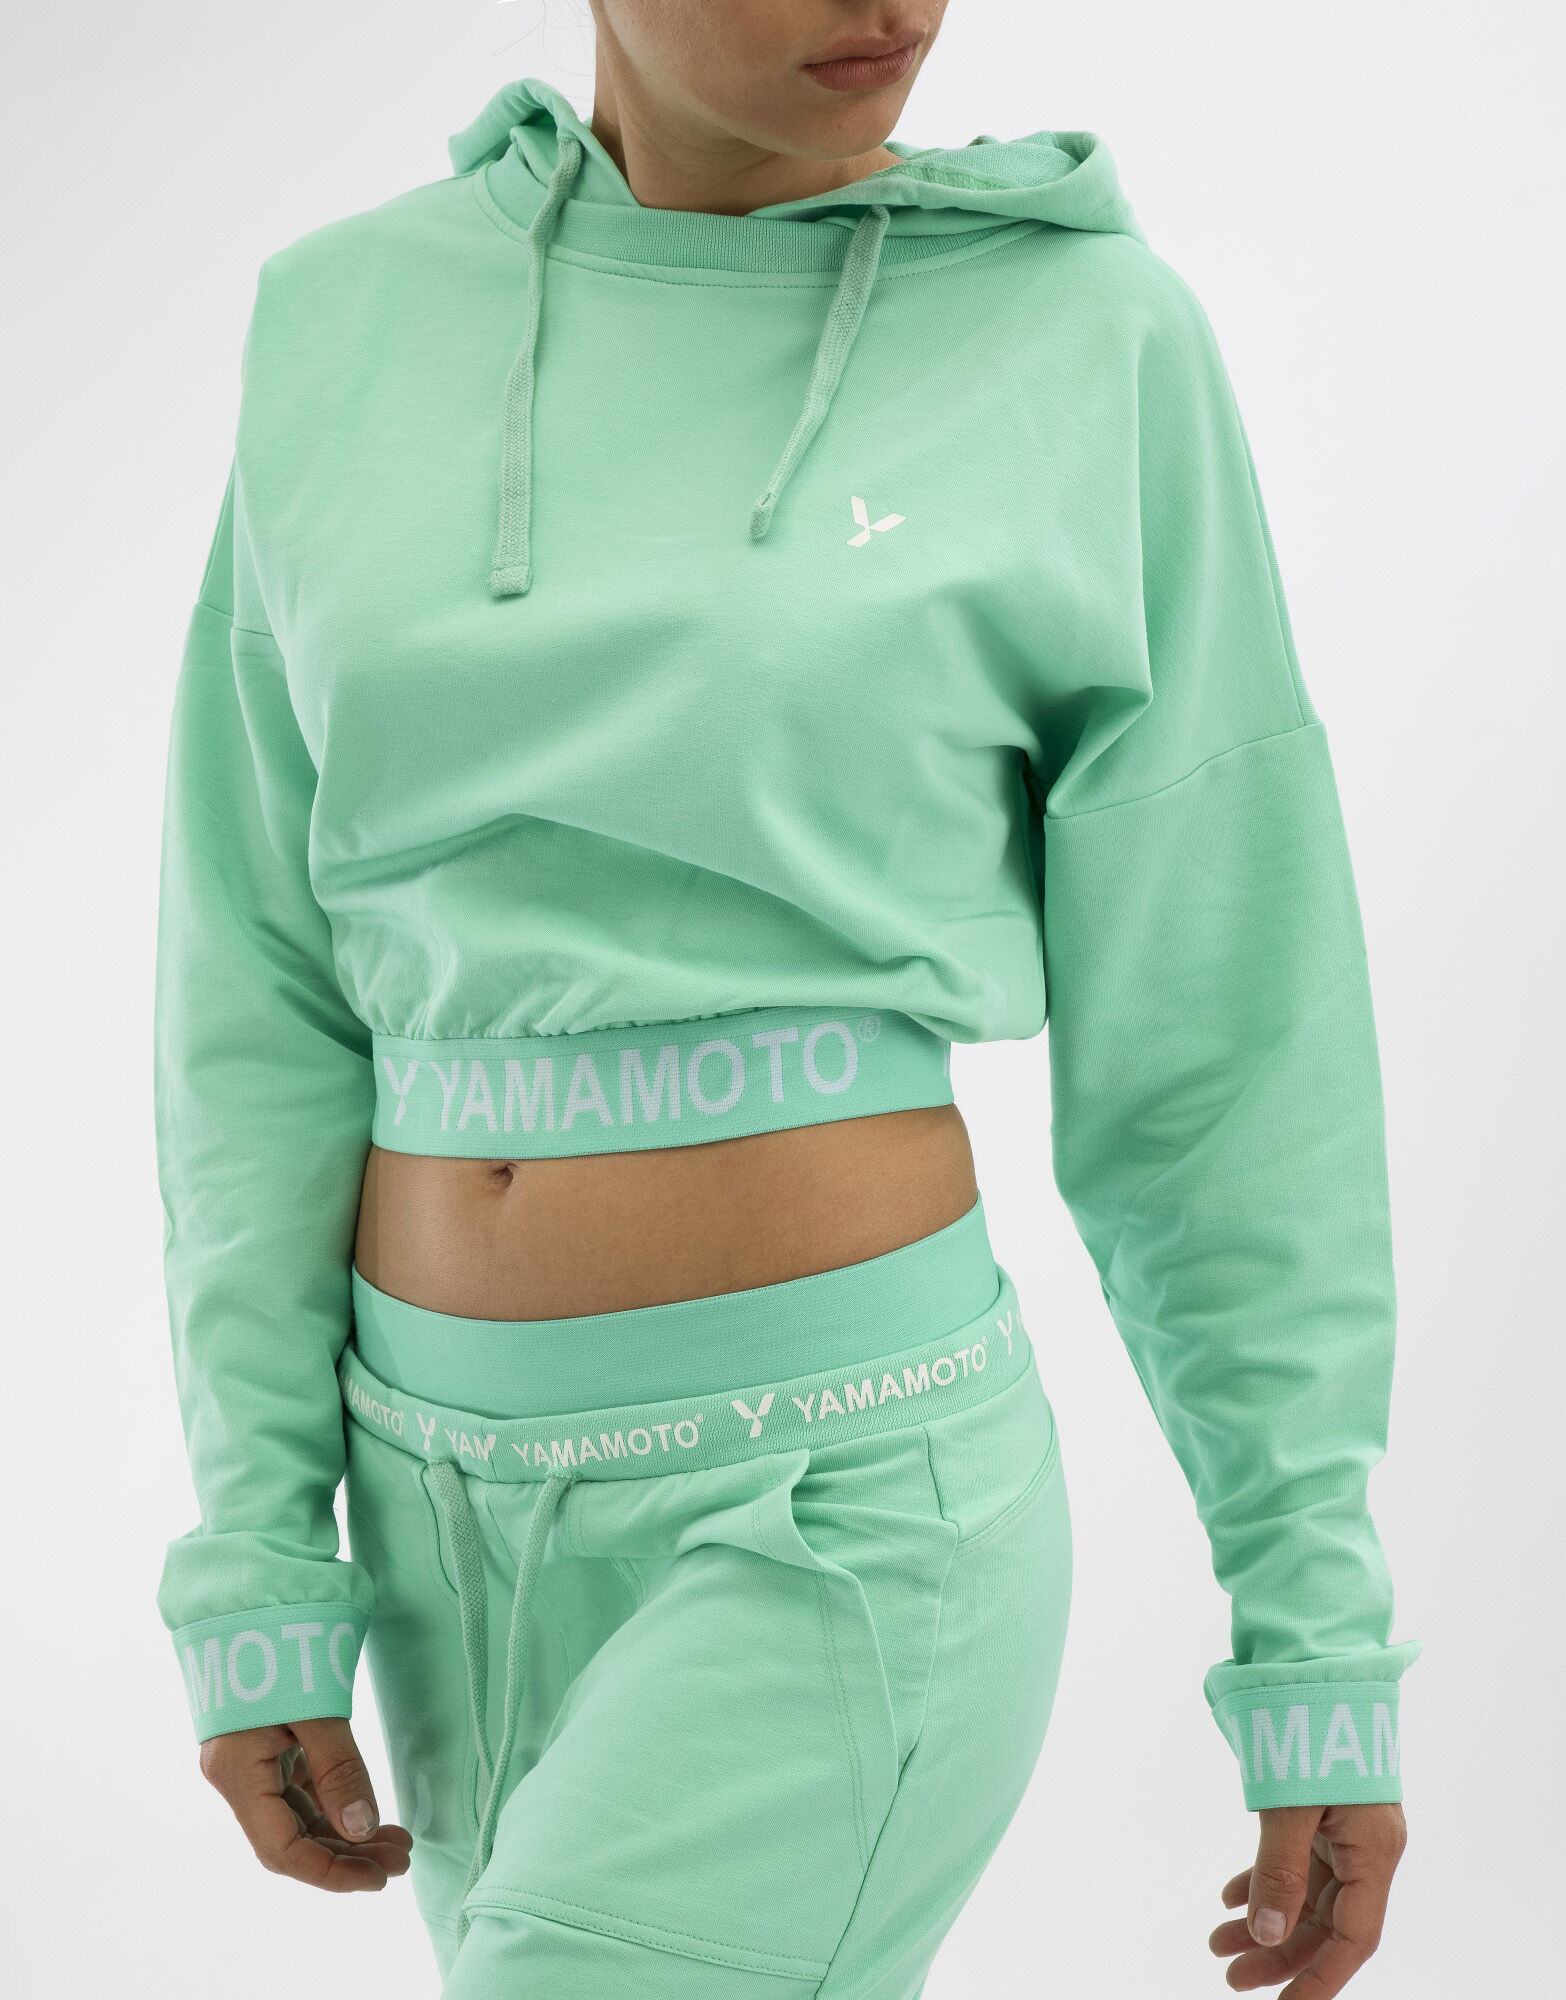 YAMAMOTO OUTFIT Lady Sweatshirt Colore: Verde Acqua Xs